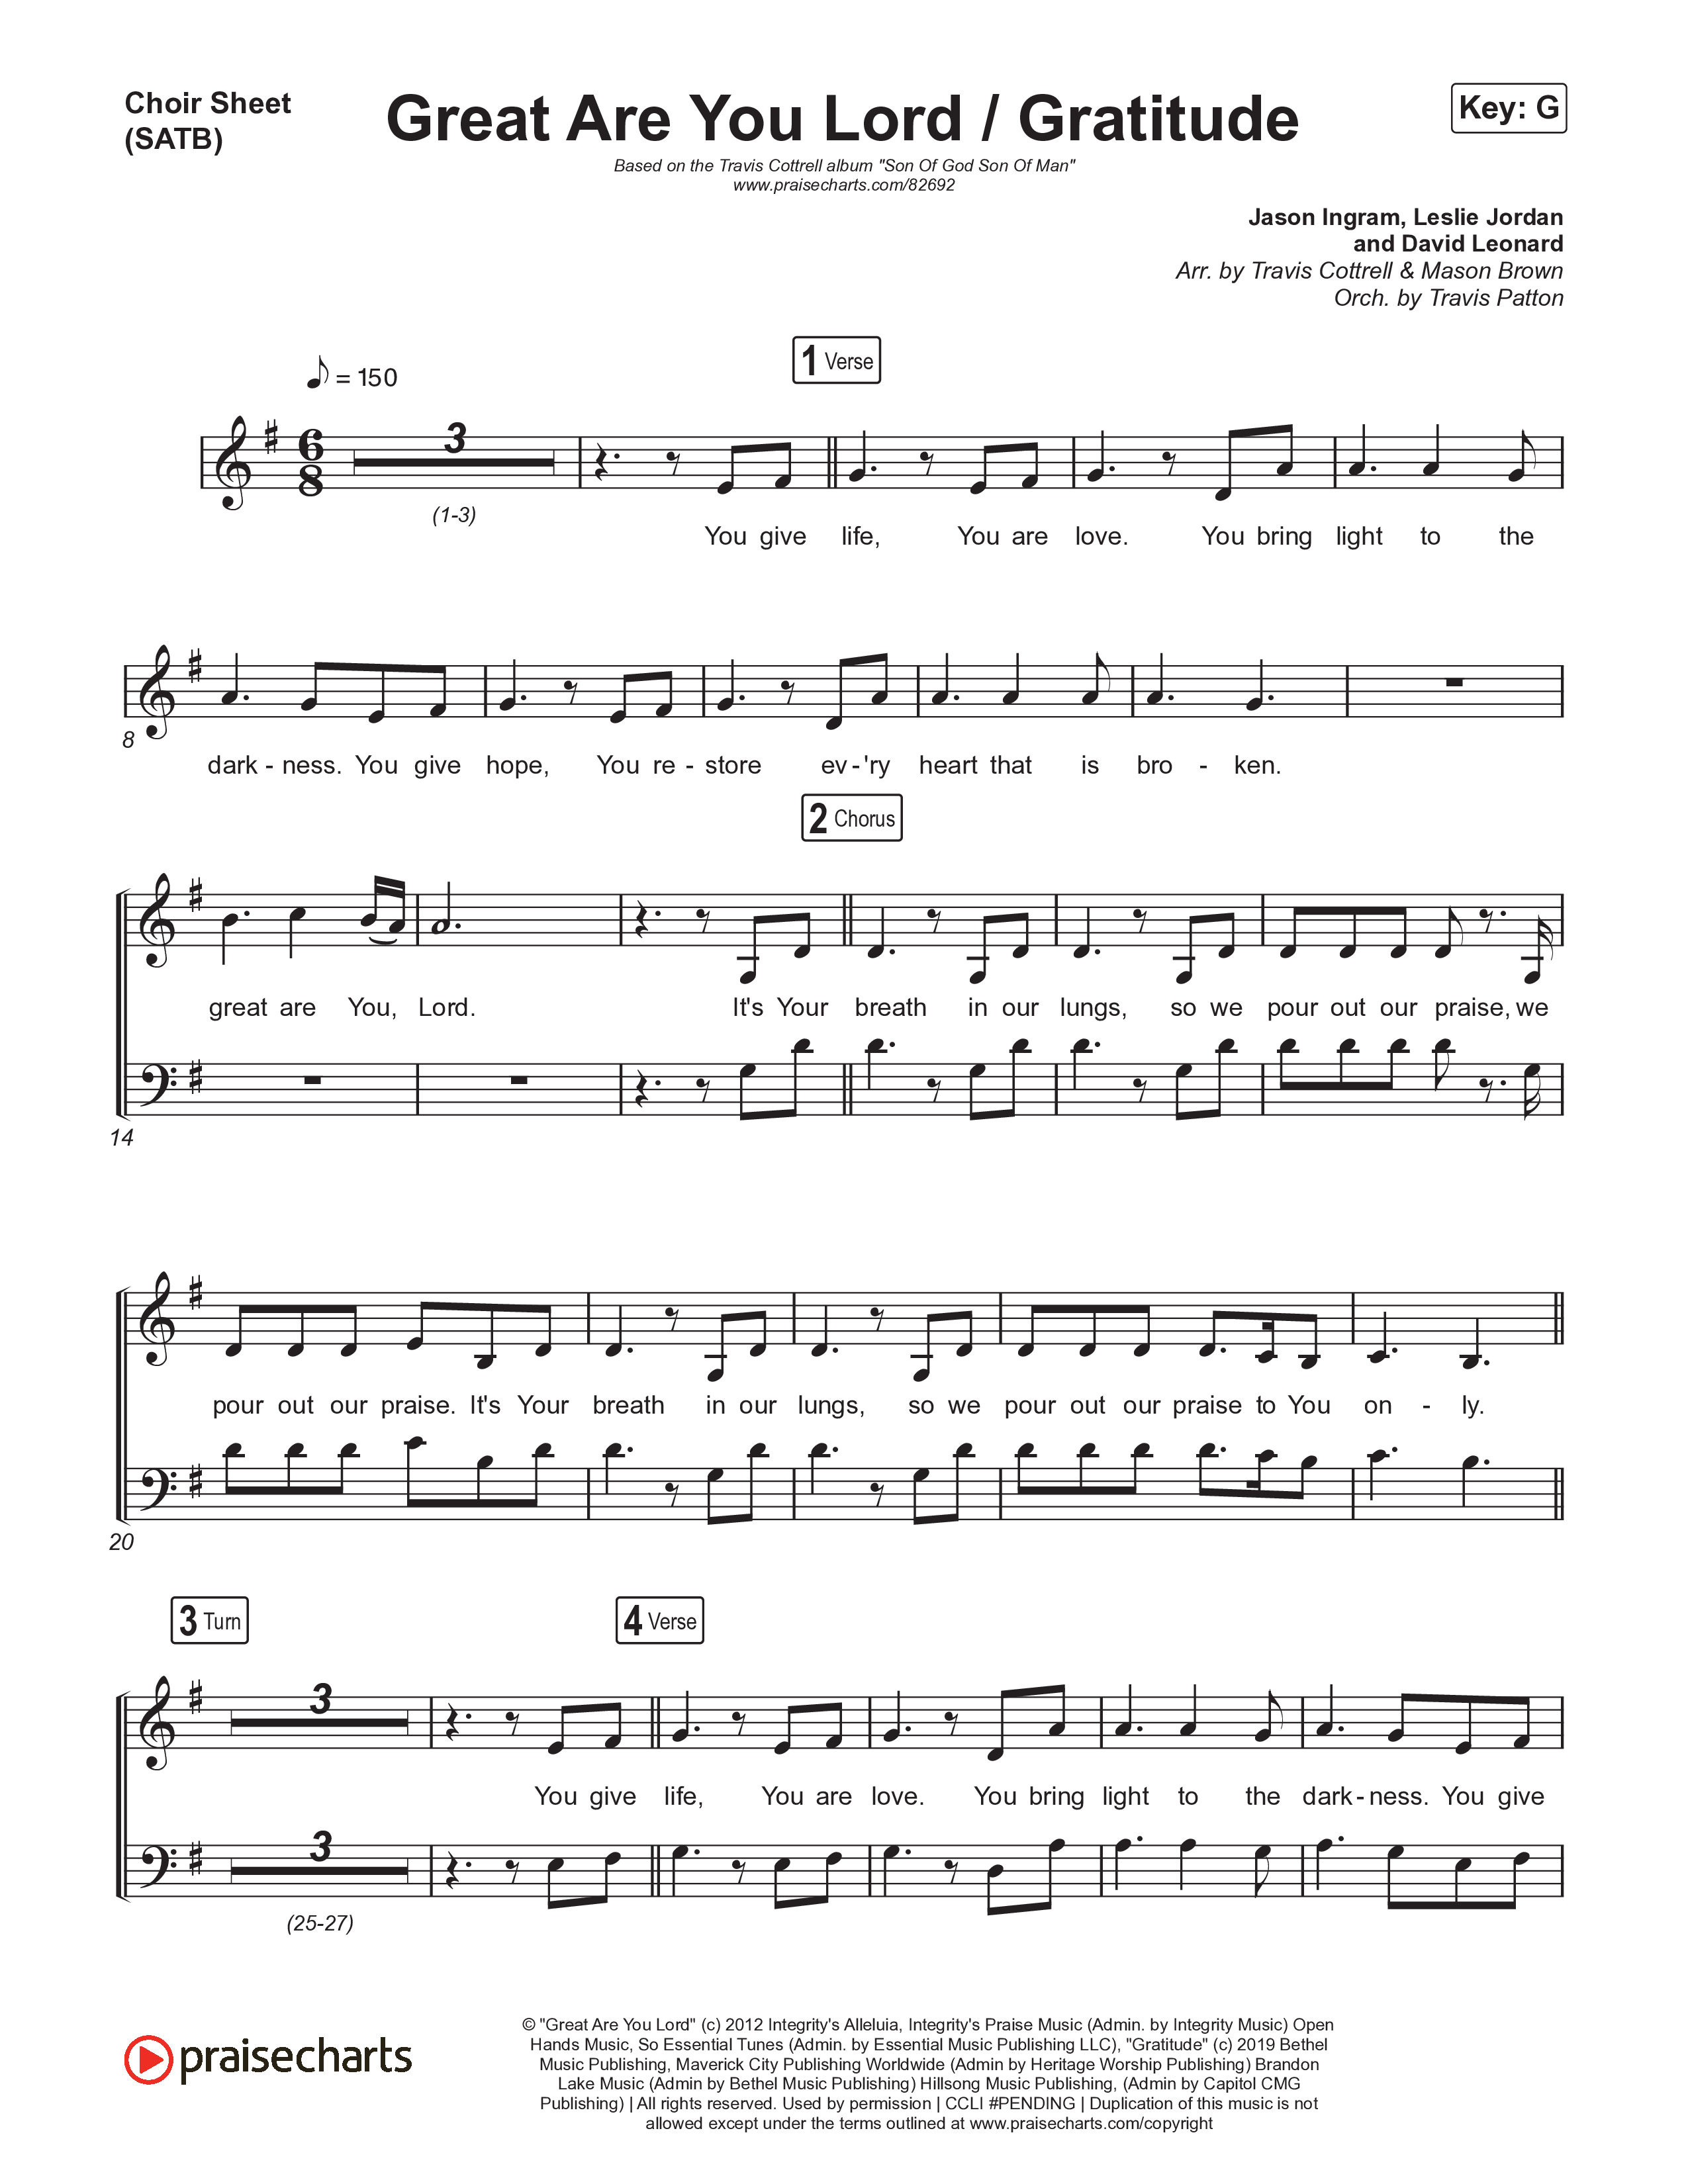 Great Are You Lord / Gratitude Choir Sheet (SATB) (Travis Cottrell / Nia Allen / Arr. Mason Brown / Orch. Travis Patton)